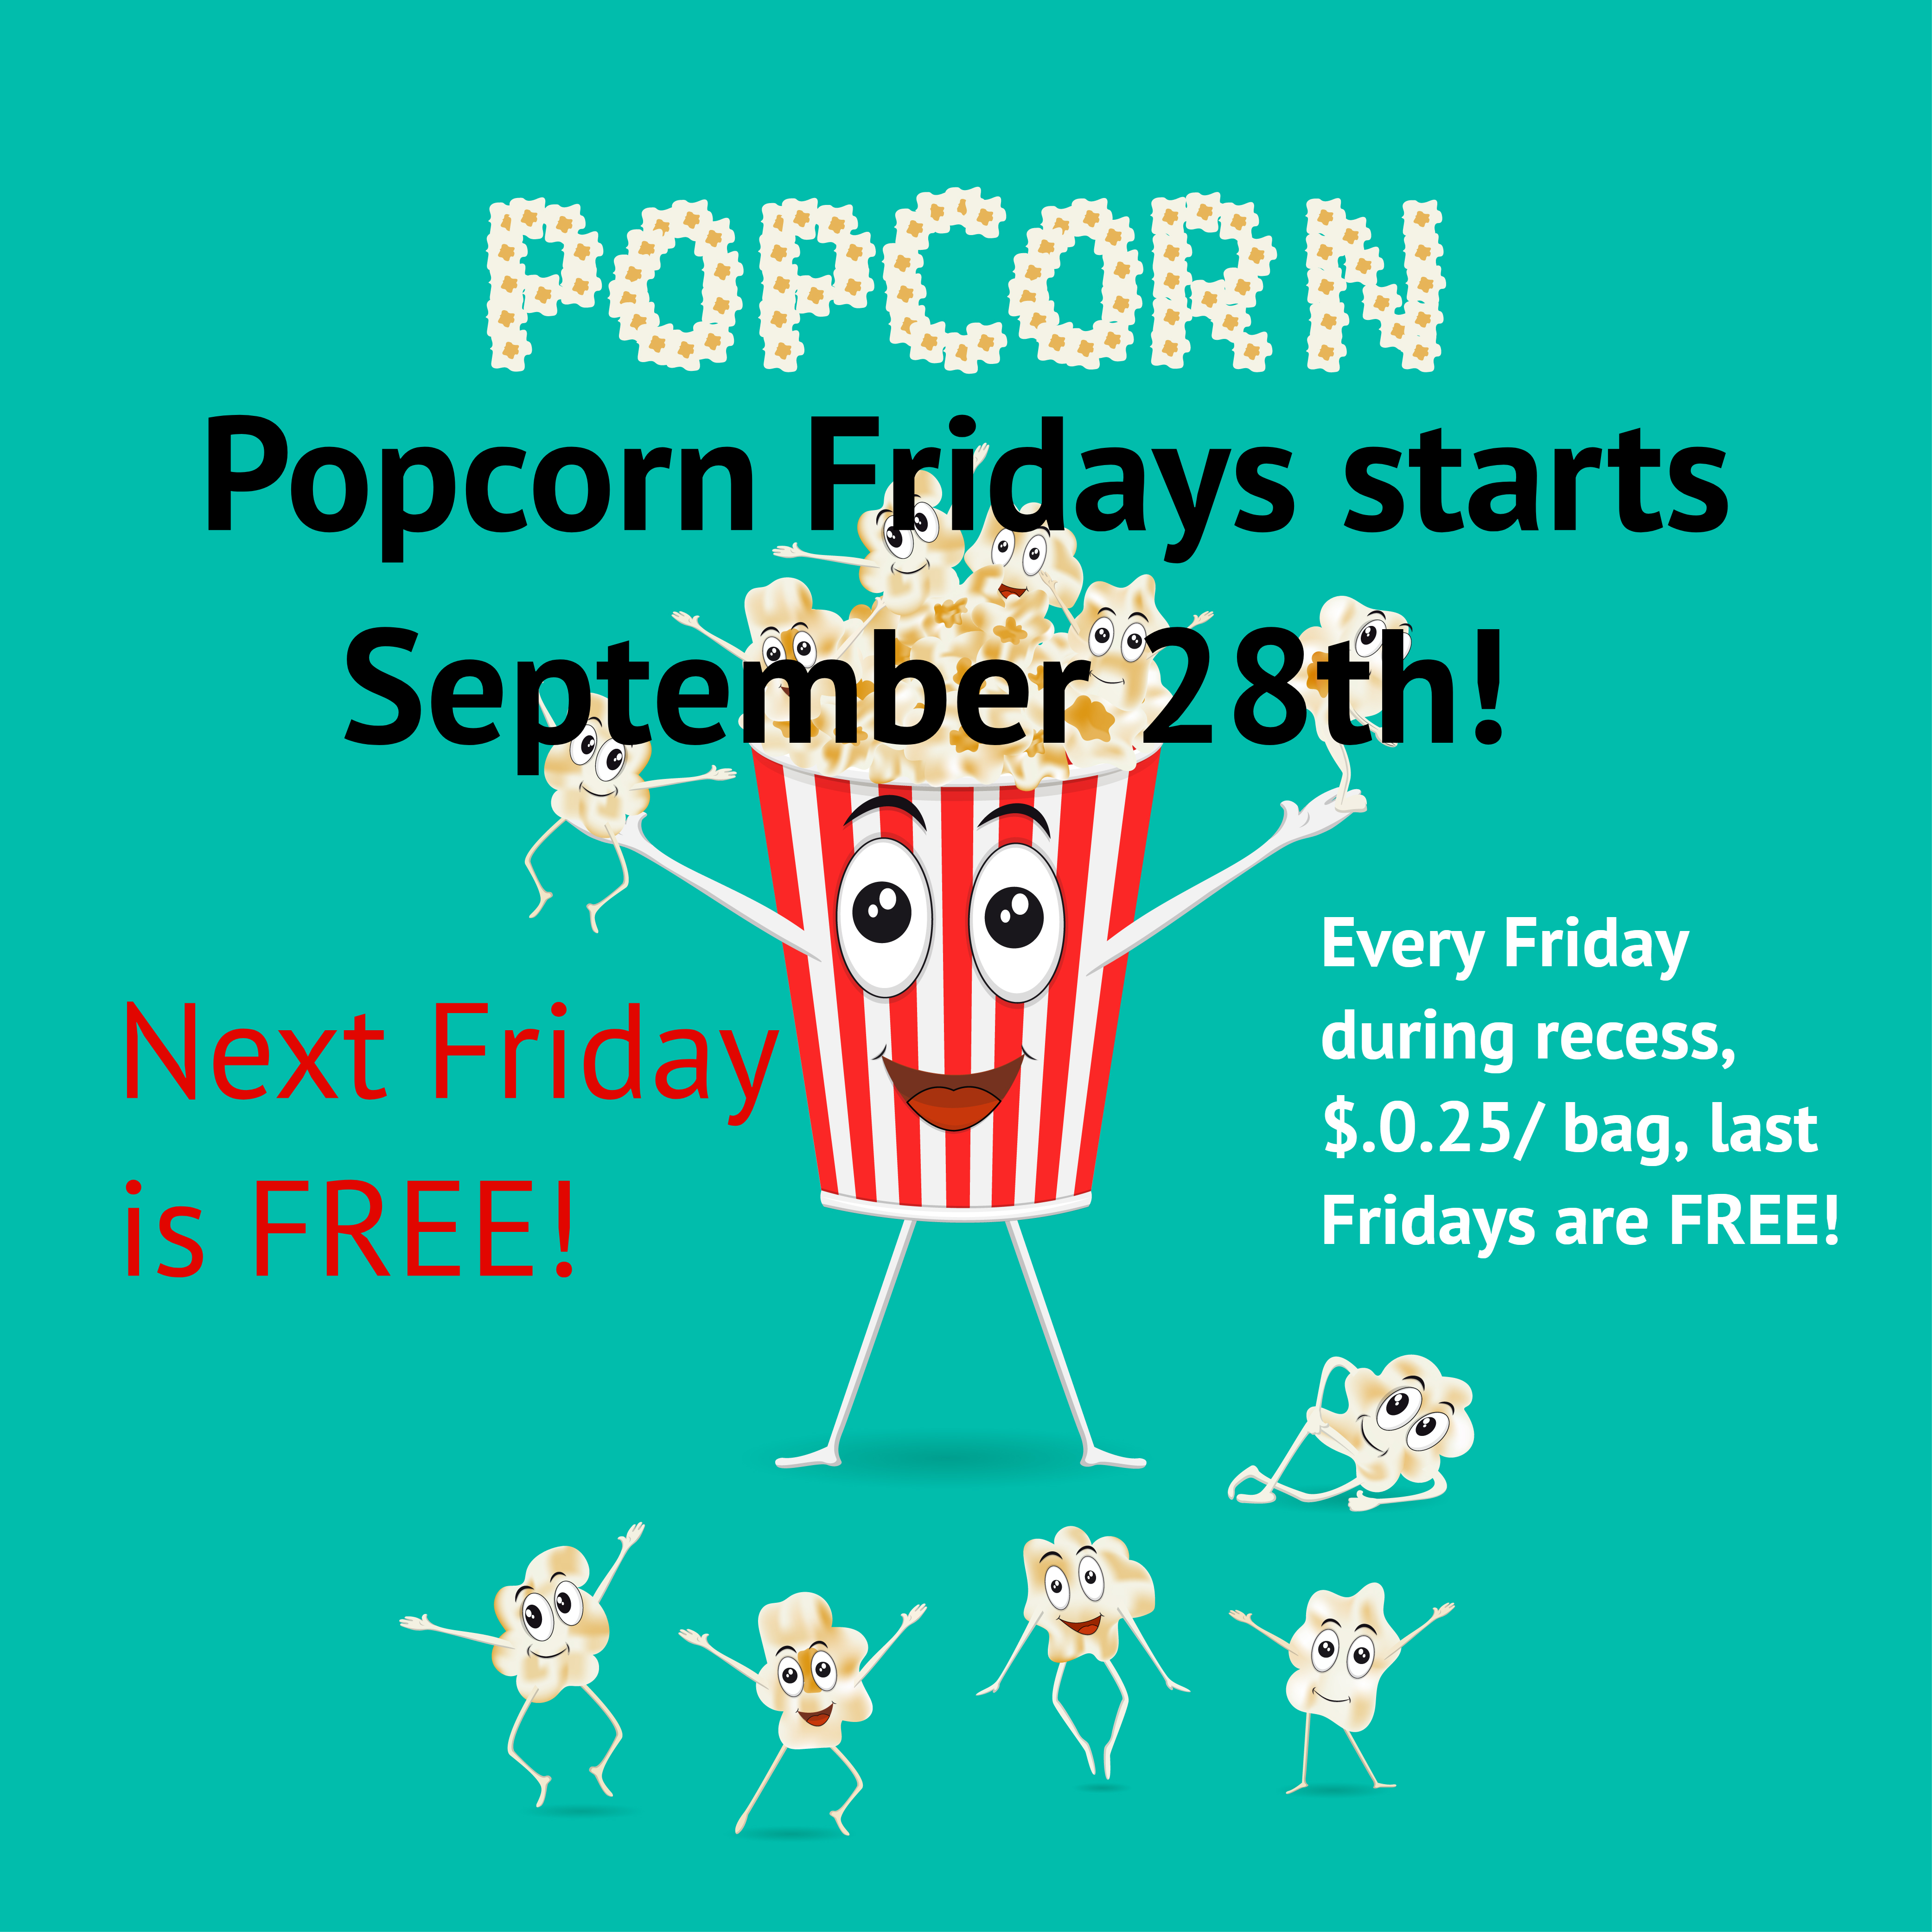 Popcorn Friday Begins this Friday, September 28th